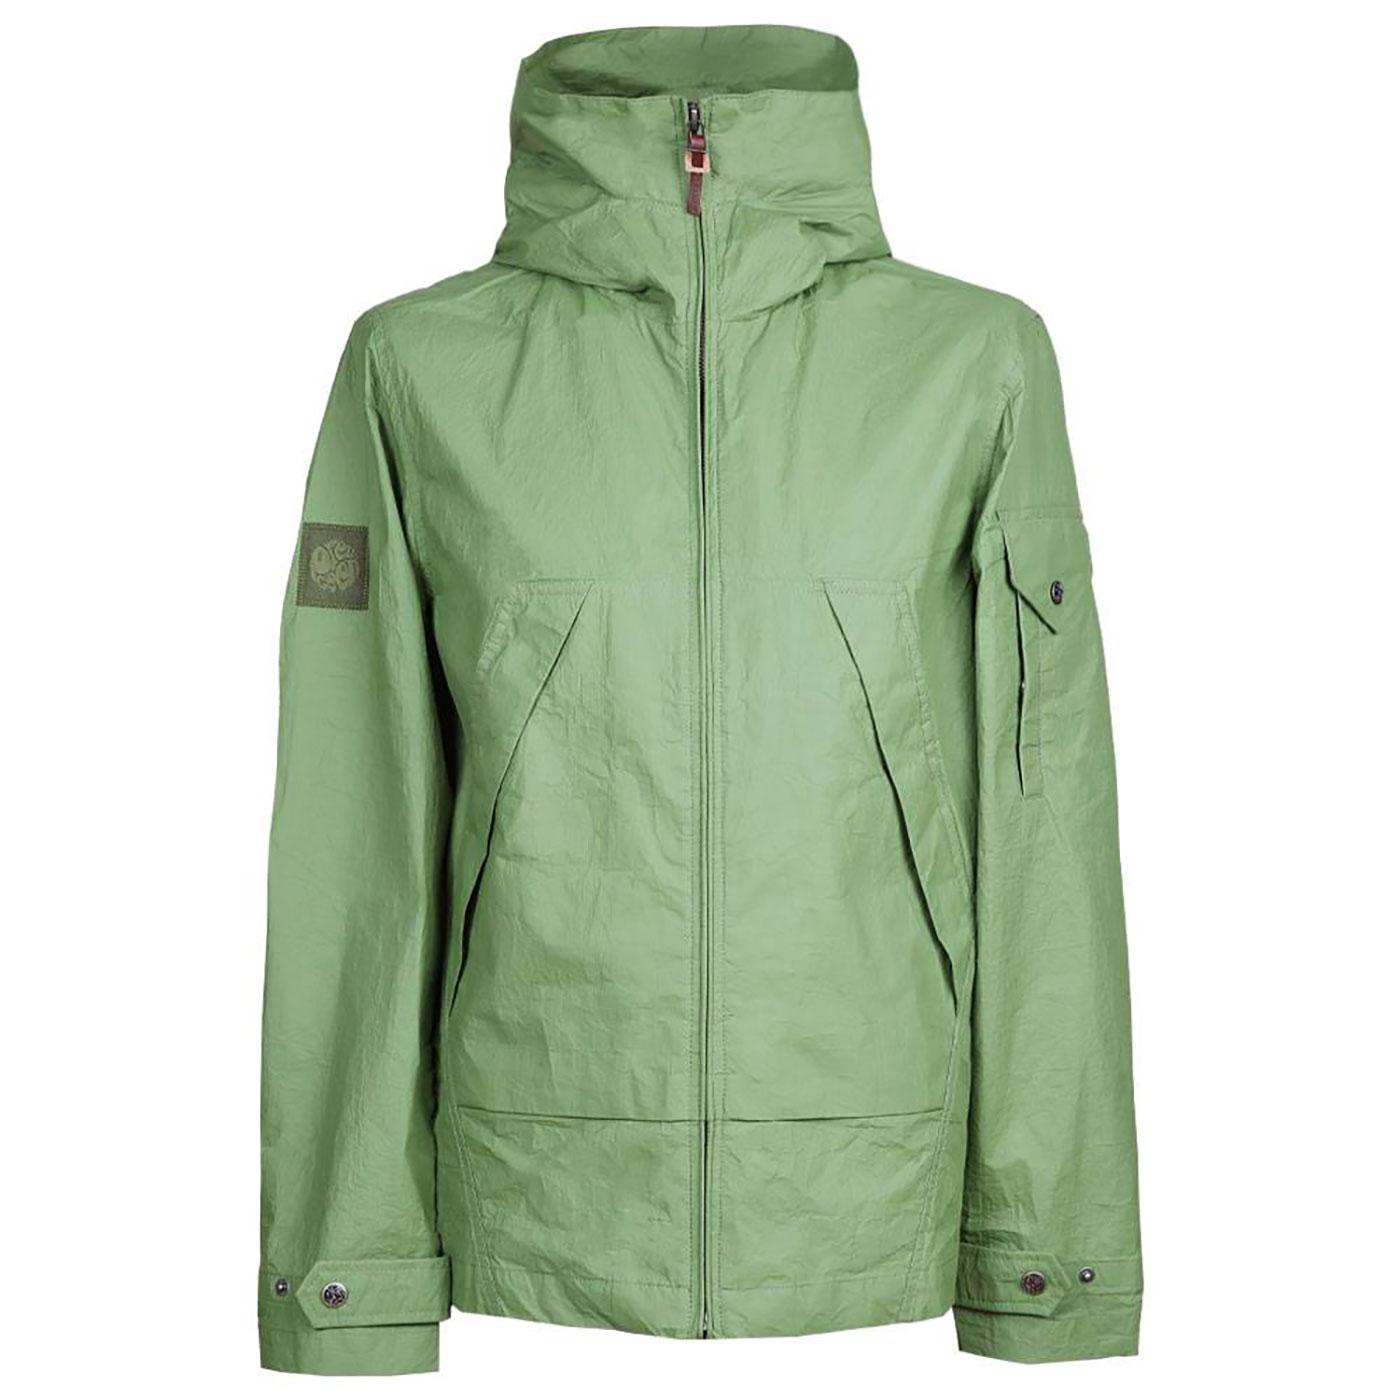 PRETTY GREEN Retro Mod Zip Up Hooded Jacket G